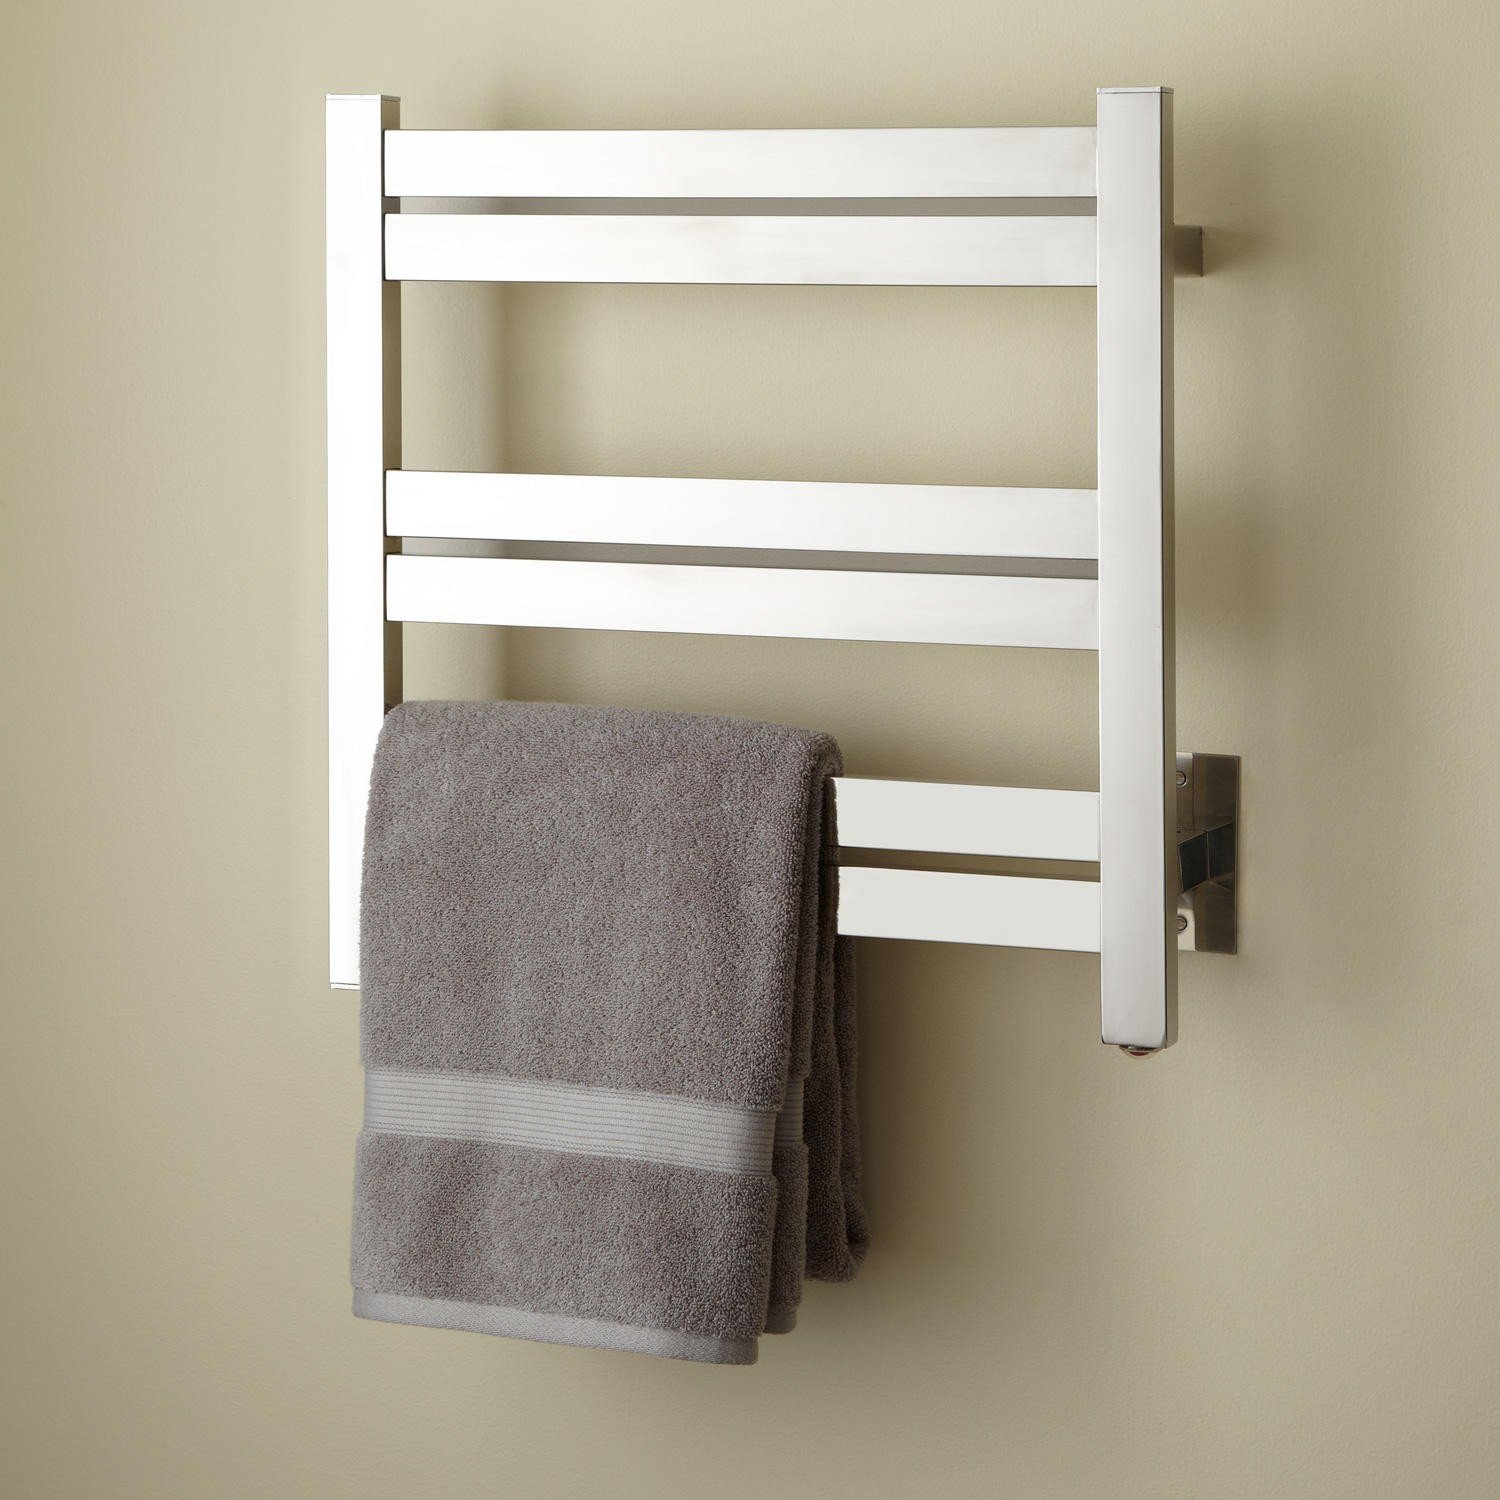 Полотенца из дерева. TB-0009 built-in Towel Warmer полотенцесушитель. Сушилка Towel Warmer. Полотенцесушитель Towel Rack r116. Полотенцесушитель р6550 hot Towel Cabinet.